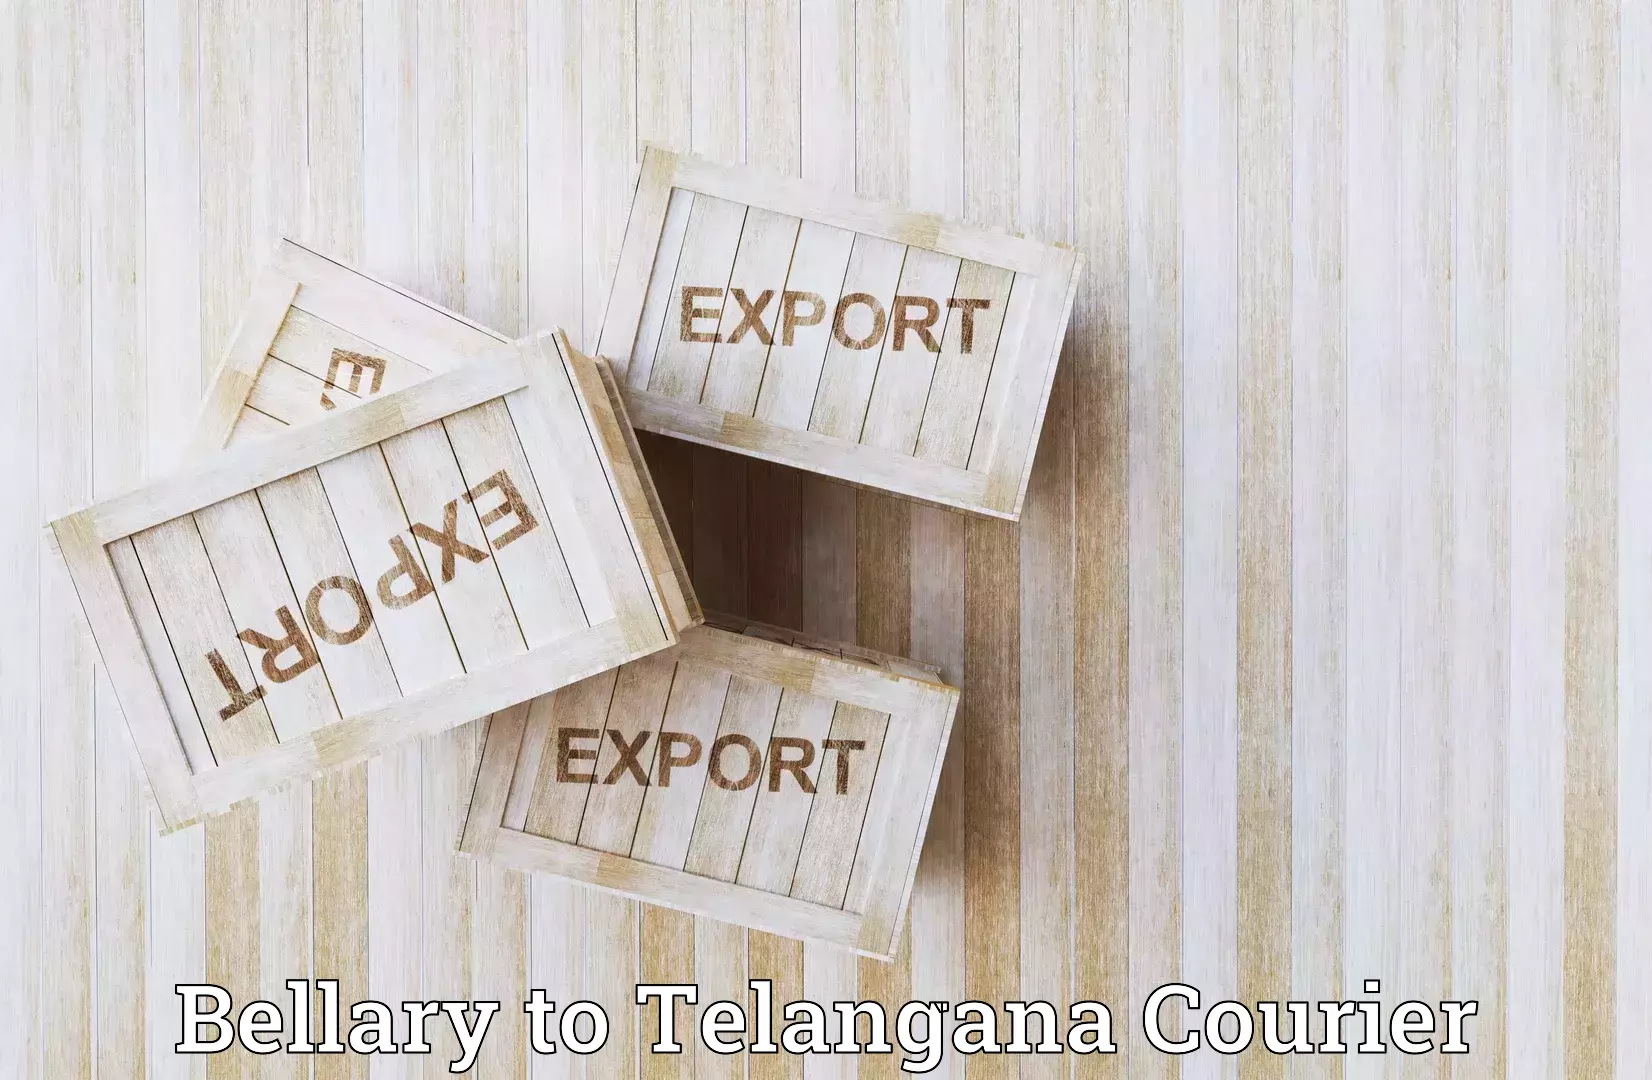 High-speed parcel service Bellary to Telangana